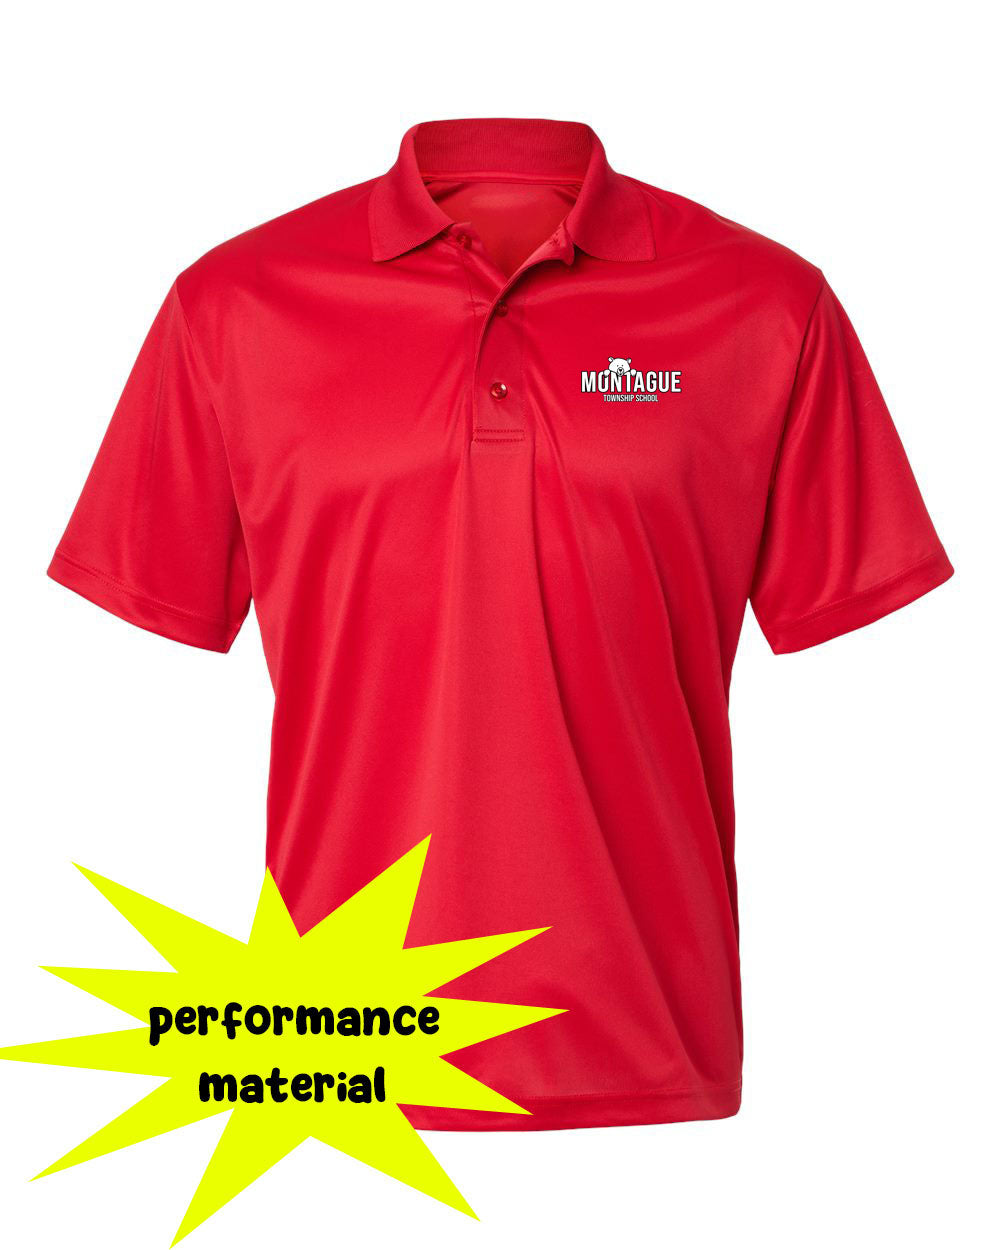 Montague Design 5 Performance Material Polo T-Shirt